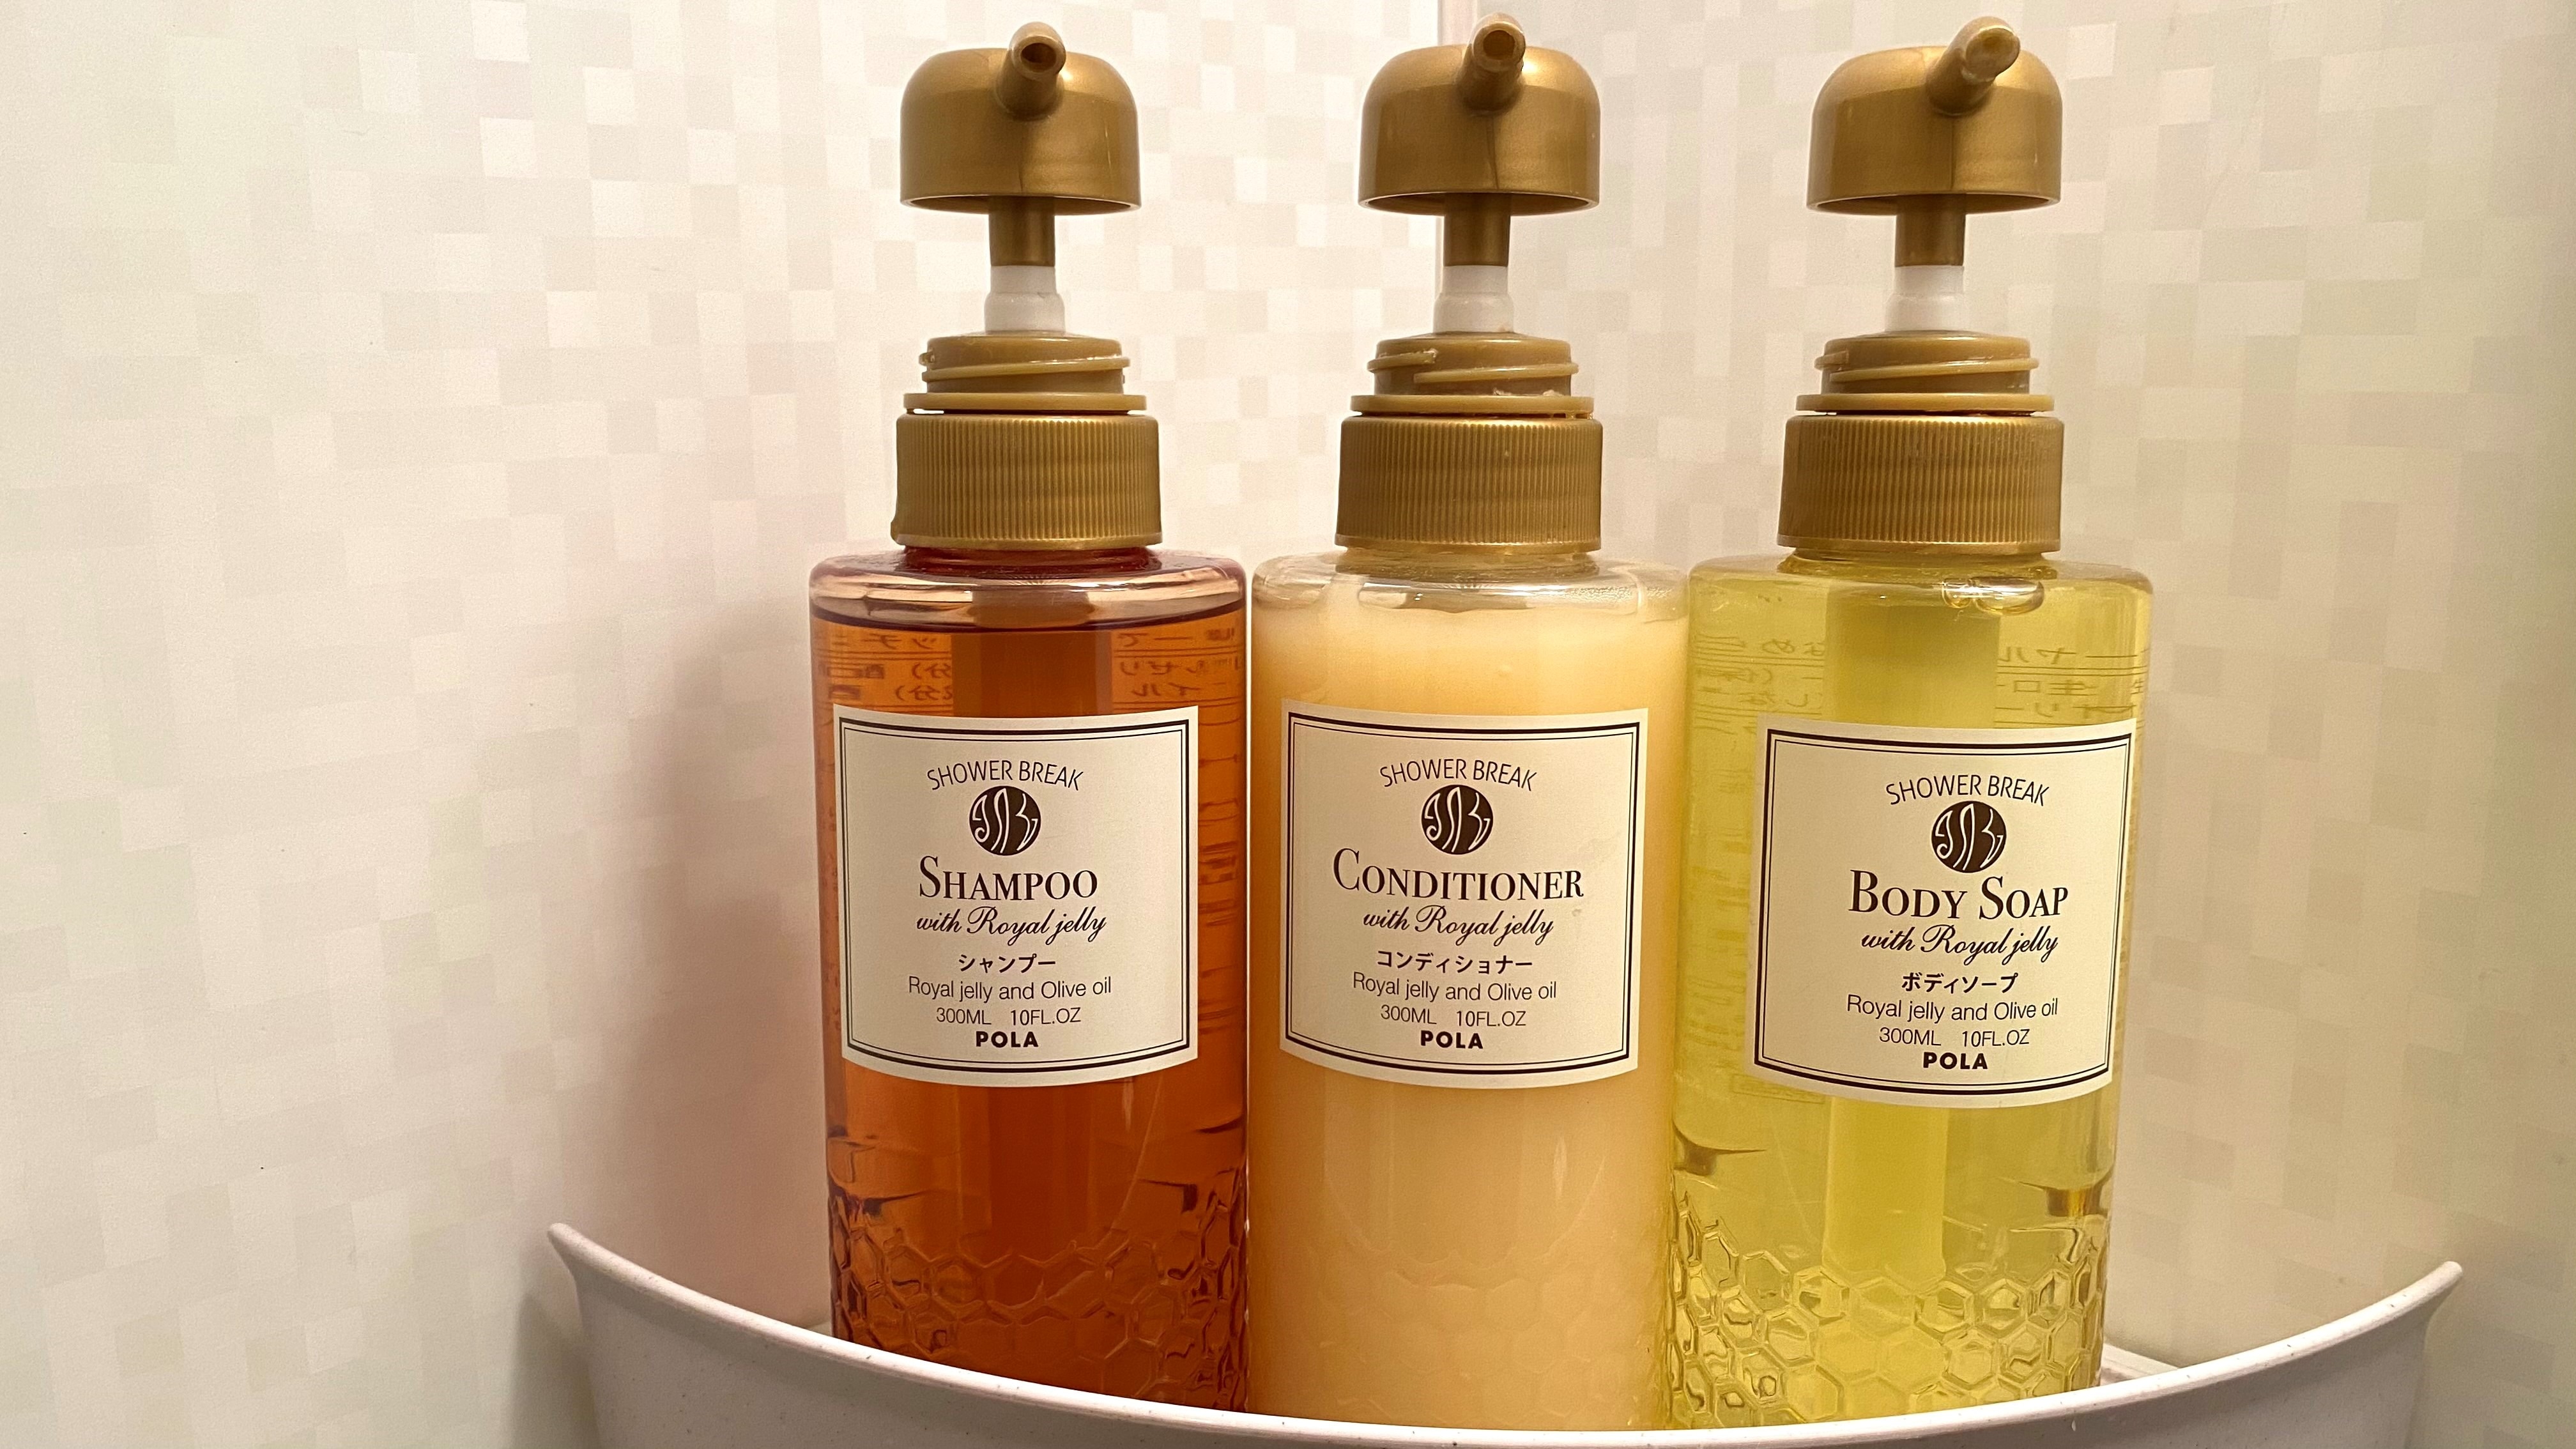 [Room] Shampoo, conditioner, body soap